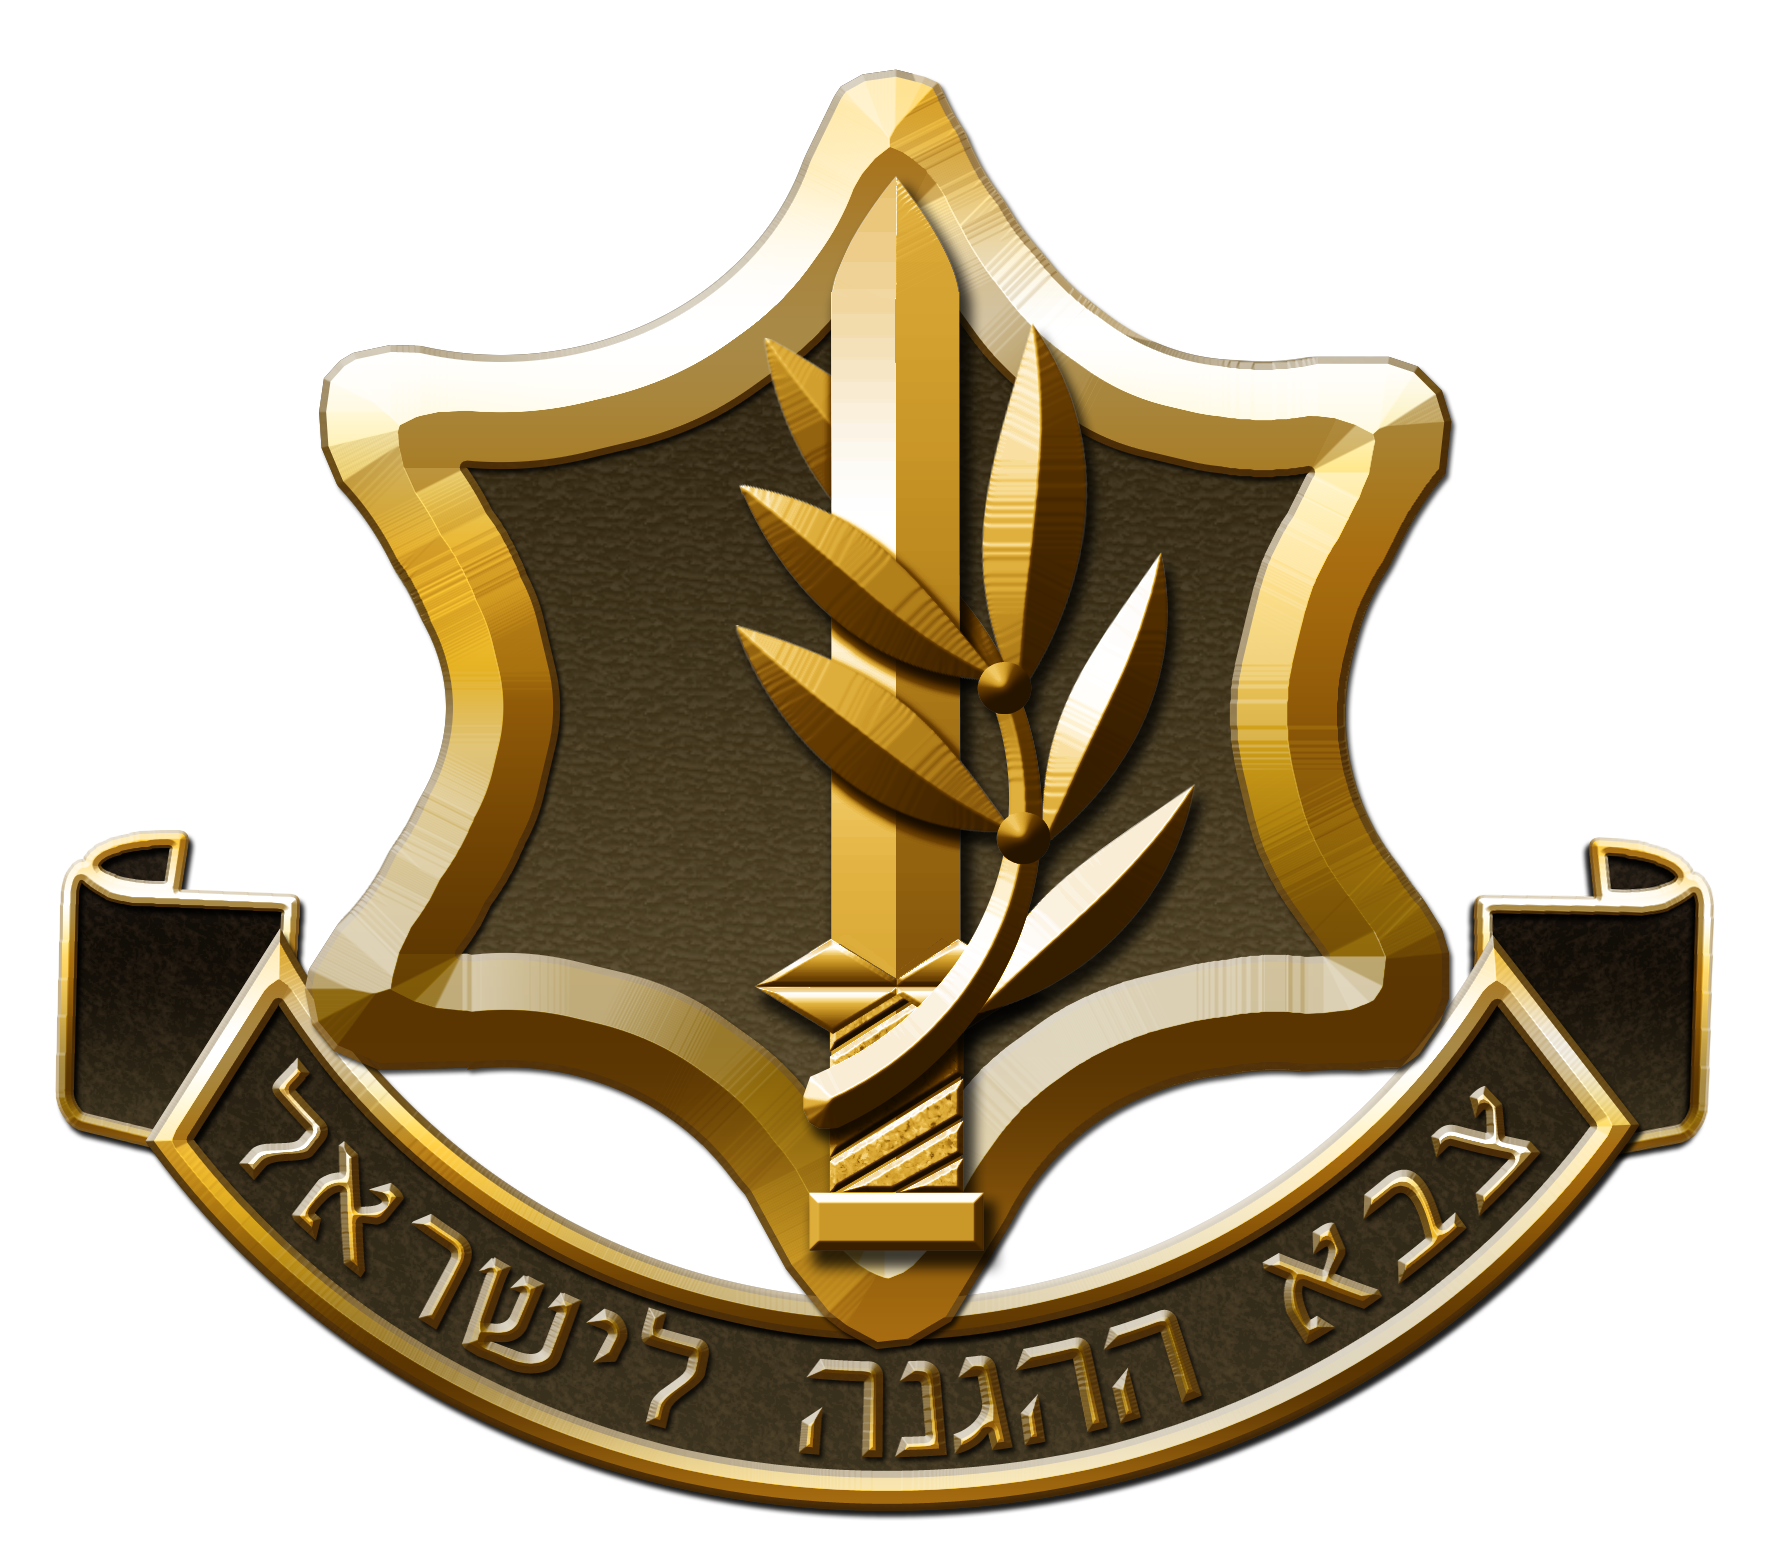 Israel Defense Forces 